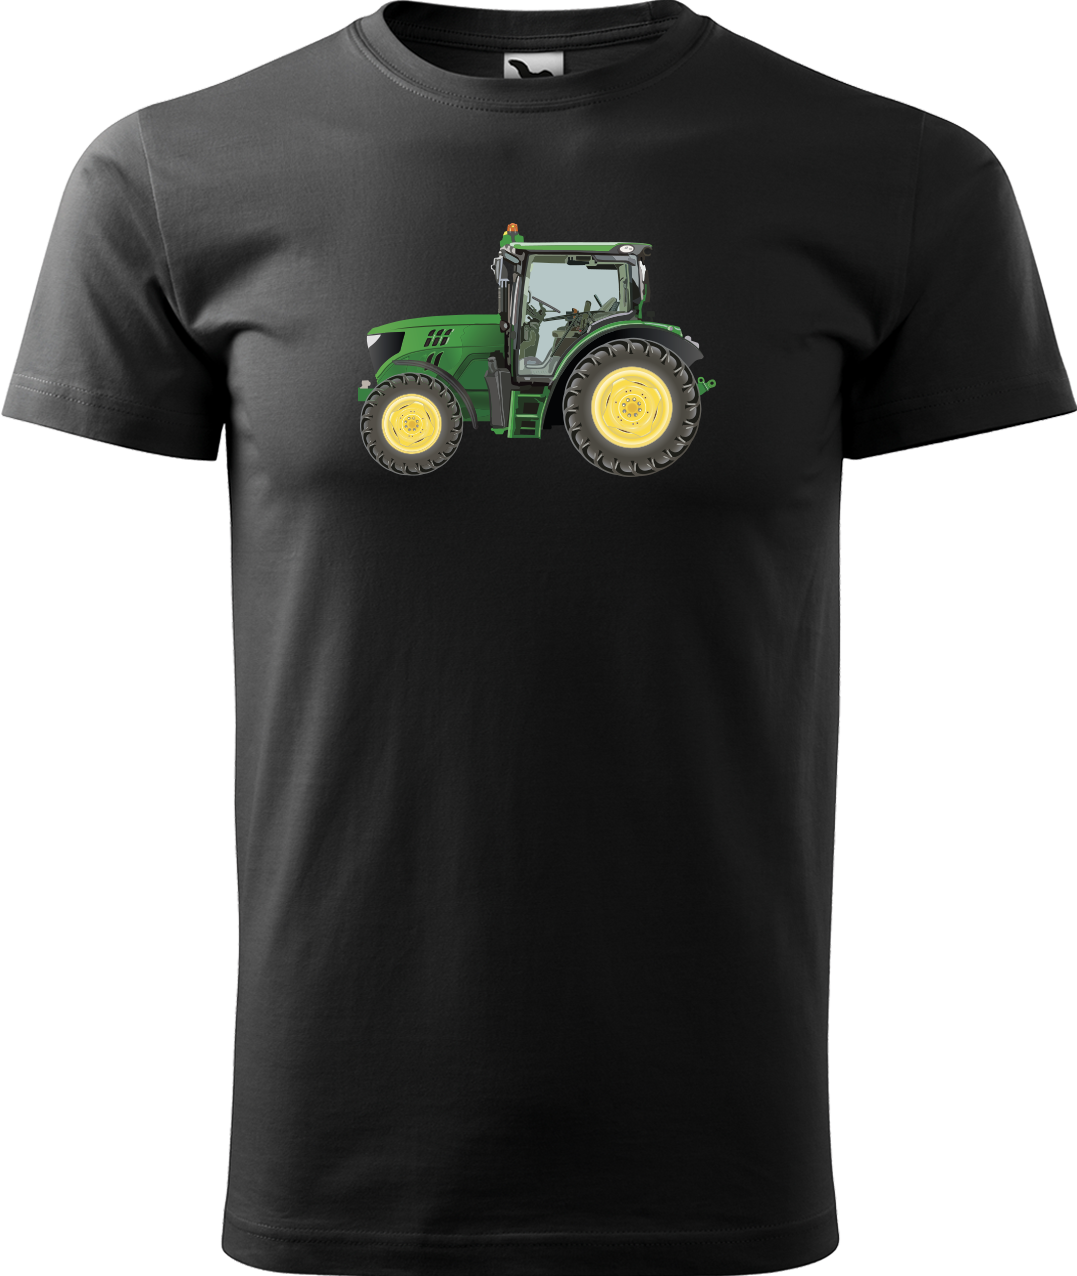 Tričko s traktorem - Zelený traktor Velikost: L, Barva: Černá (01)